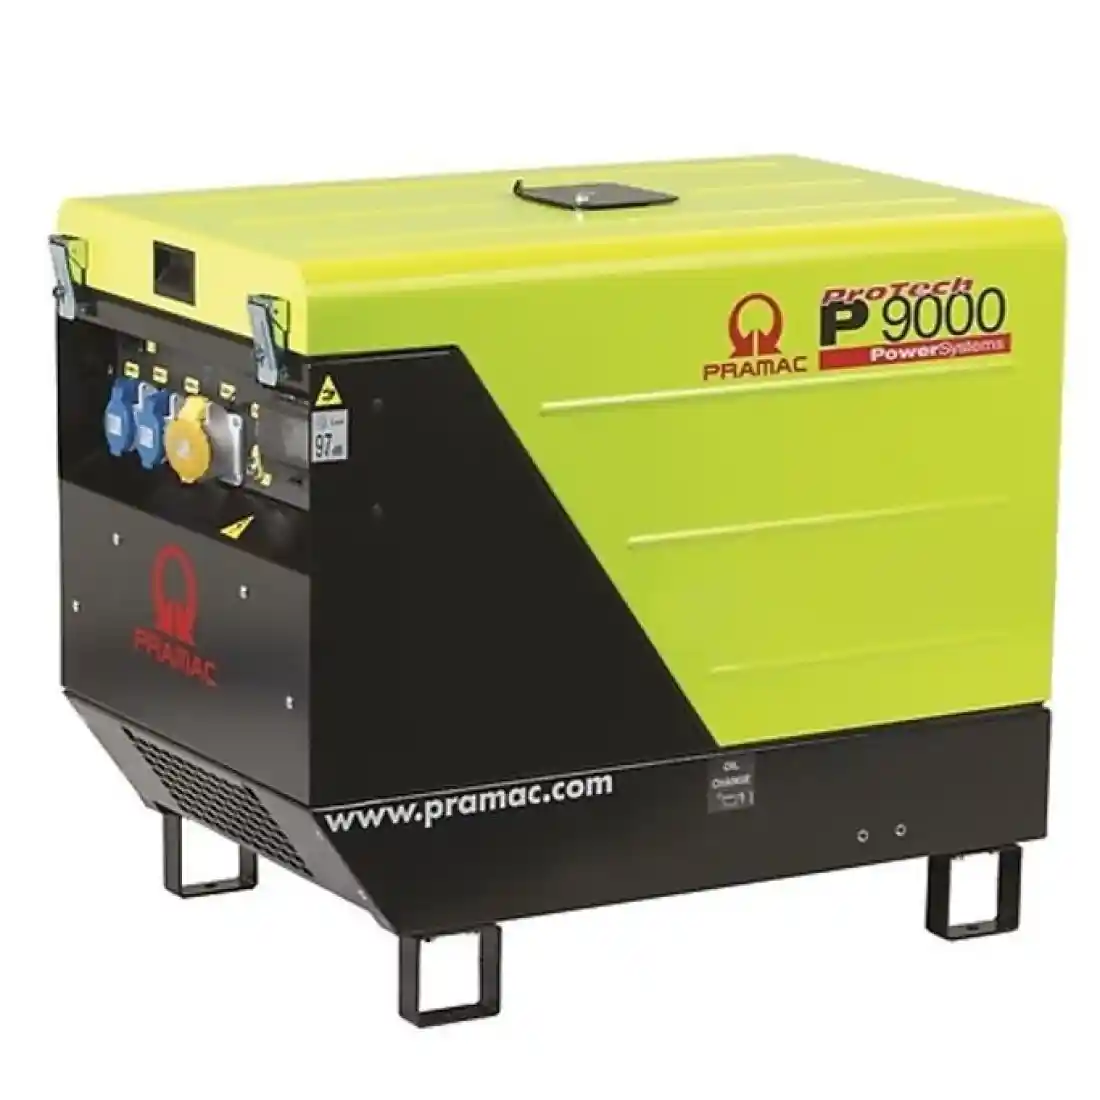 Pramac P9000 7.9kw 230V / 110V Diesel Generator Electric Start